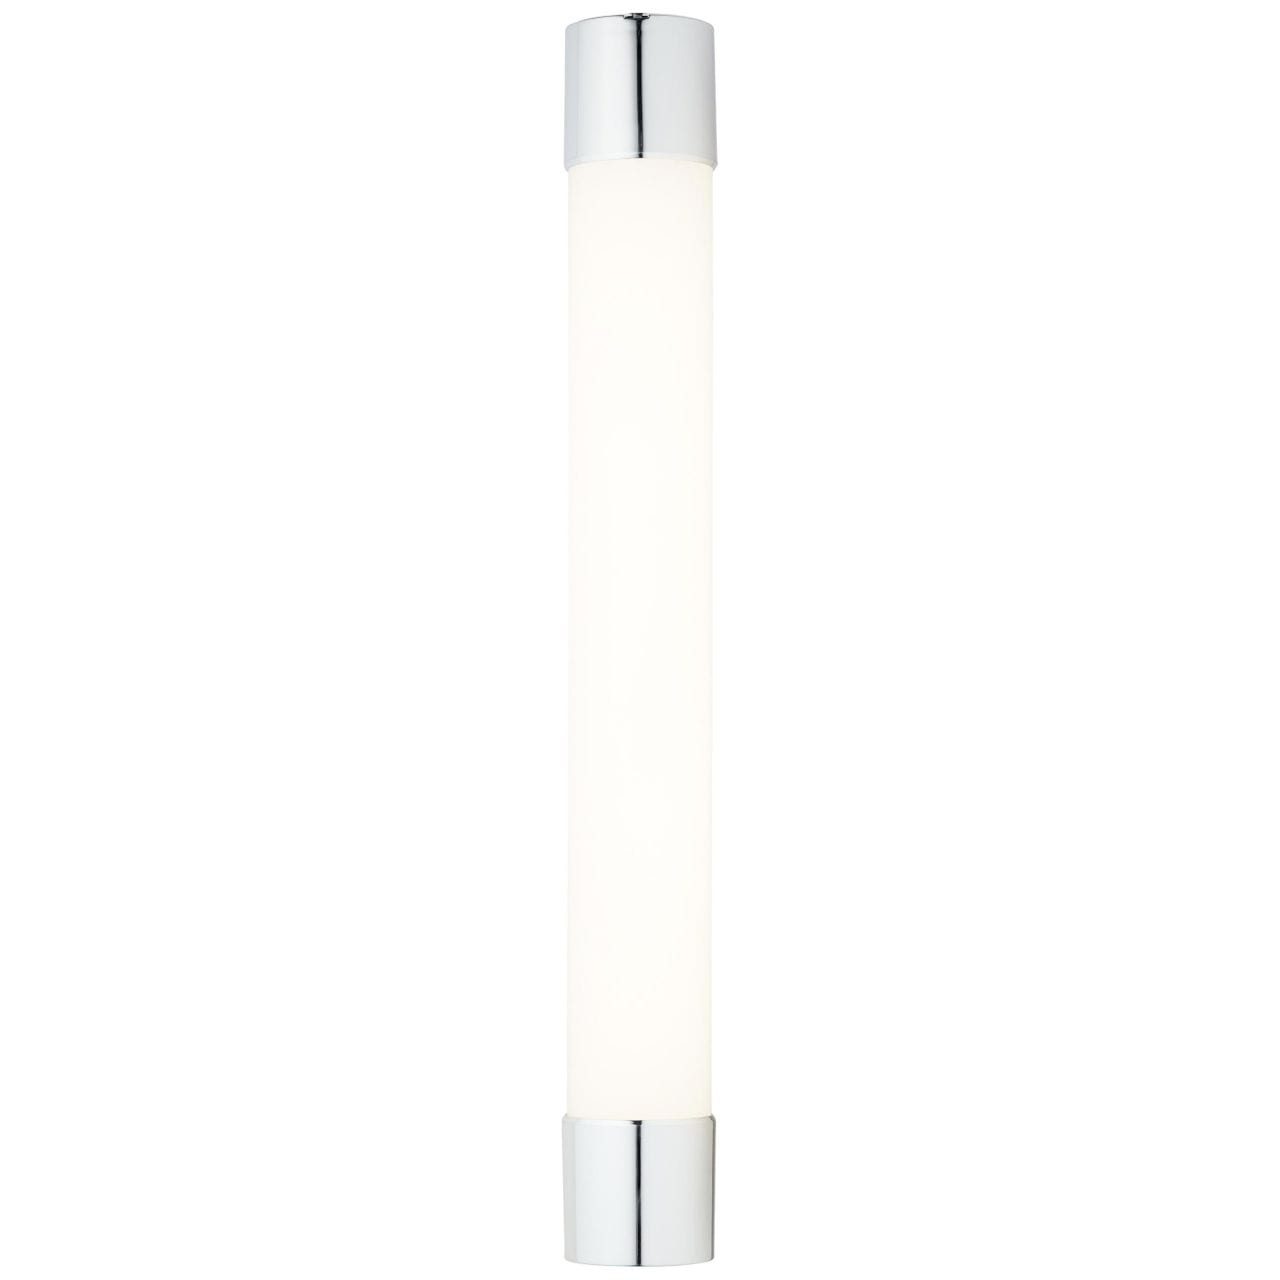 Brilliant LED Wandleuchte »Horace«, 1 flammig, Leuchtmittel LED-Modul | LED fest integriert, 60 cm, inkl Steckdose, 1300lm, kaltweiß, IP54, Metall/Glas, weiß/chrom